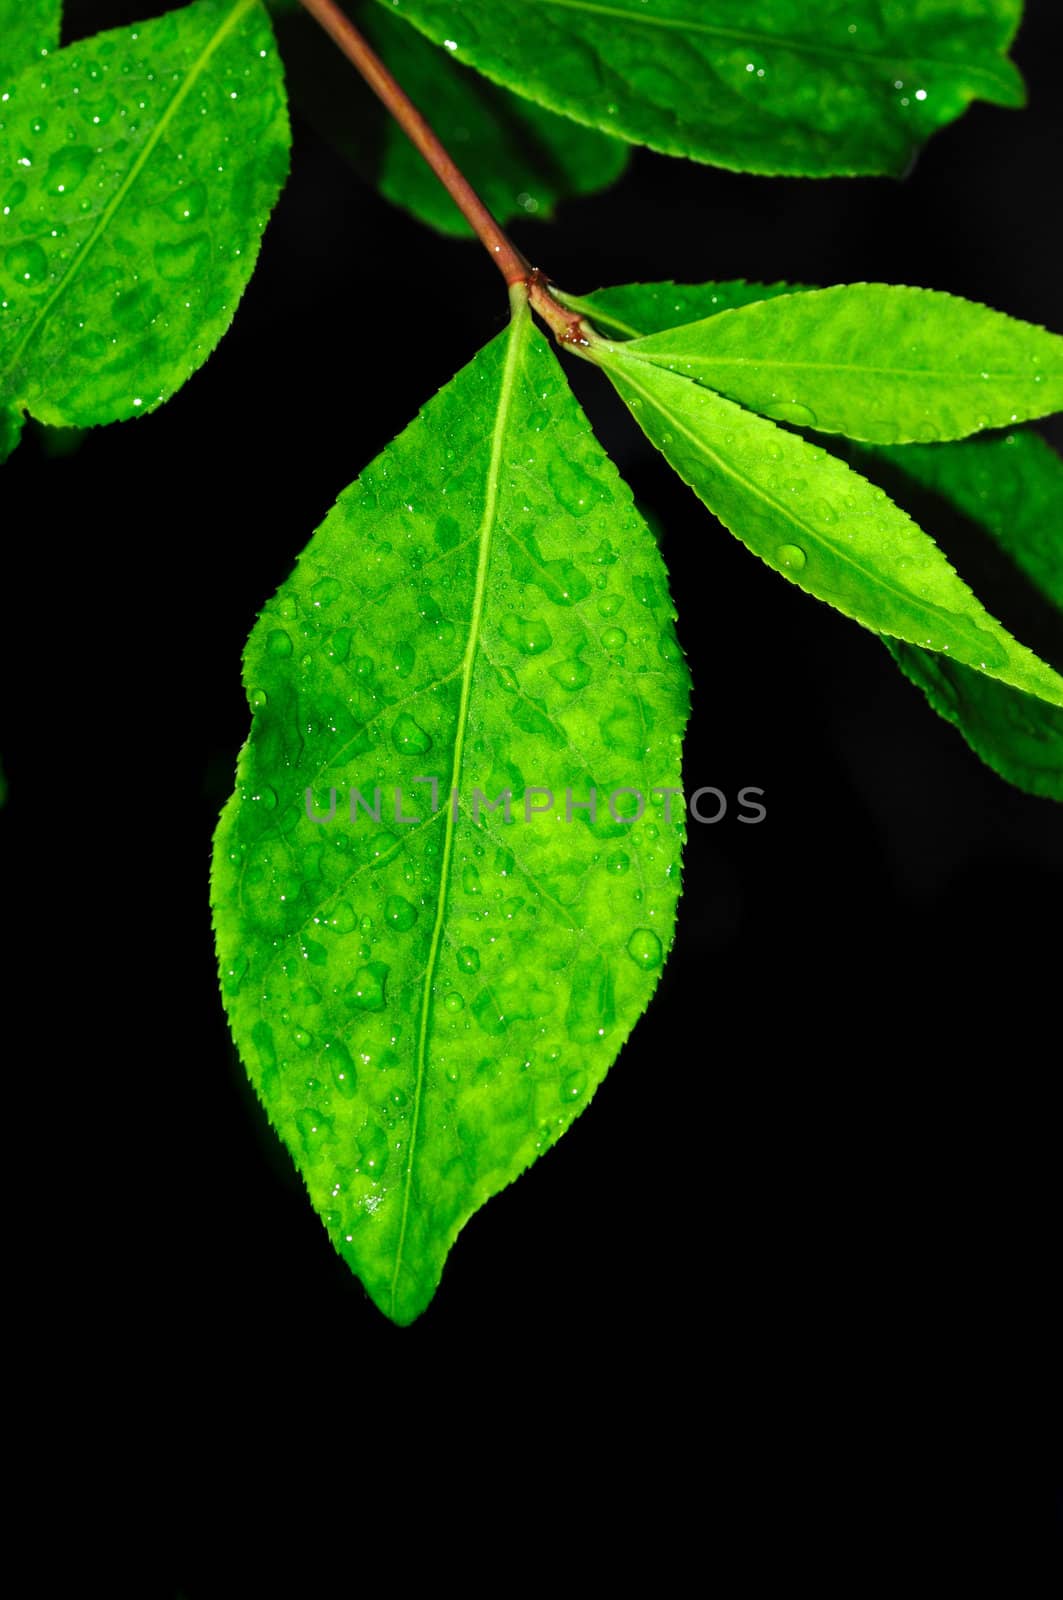 Dew drops on a green leaves agaist a dark back ground